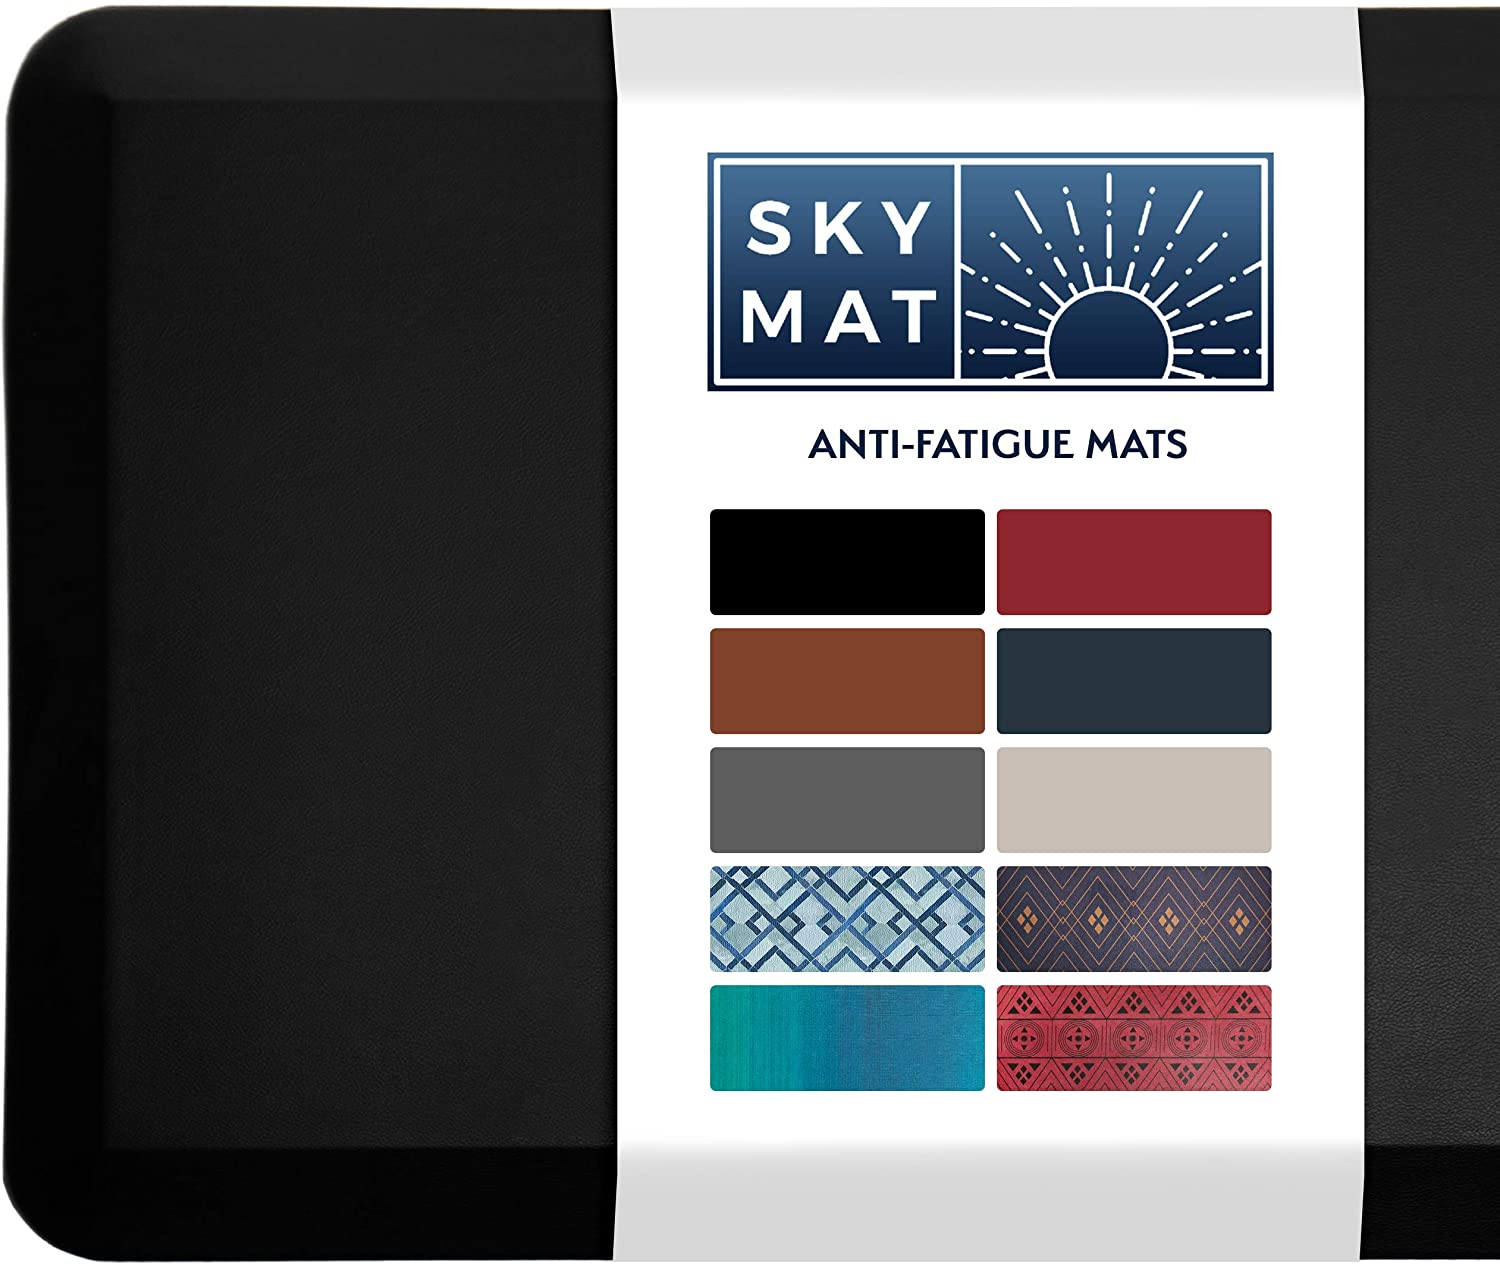 Sky solution anti-fatigue mat